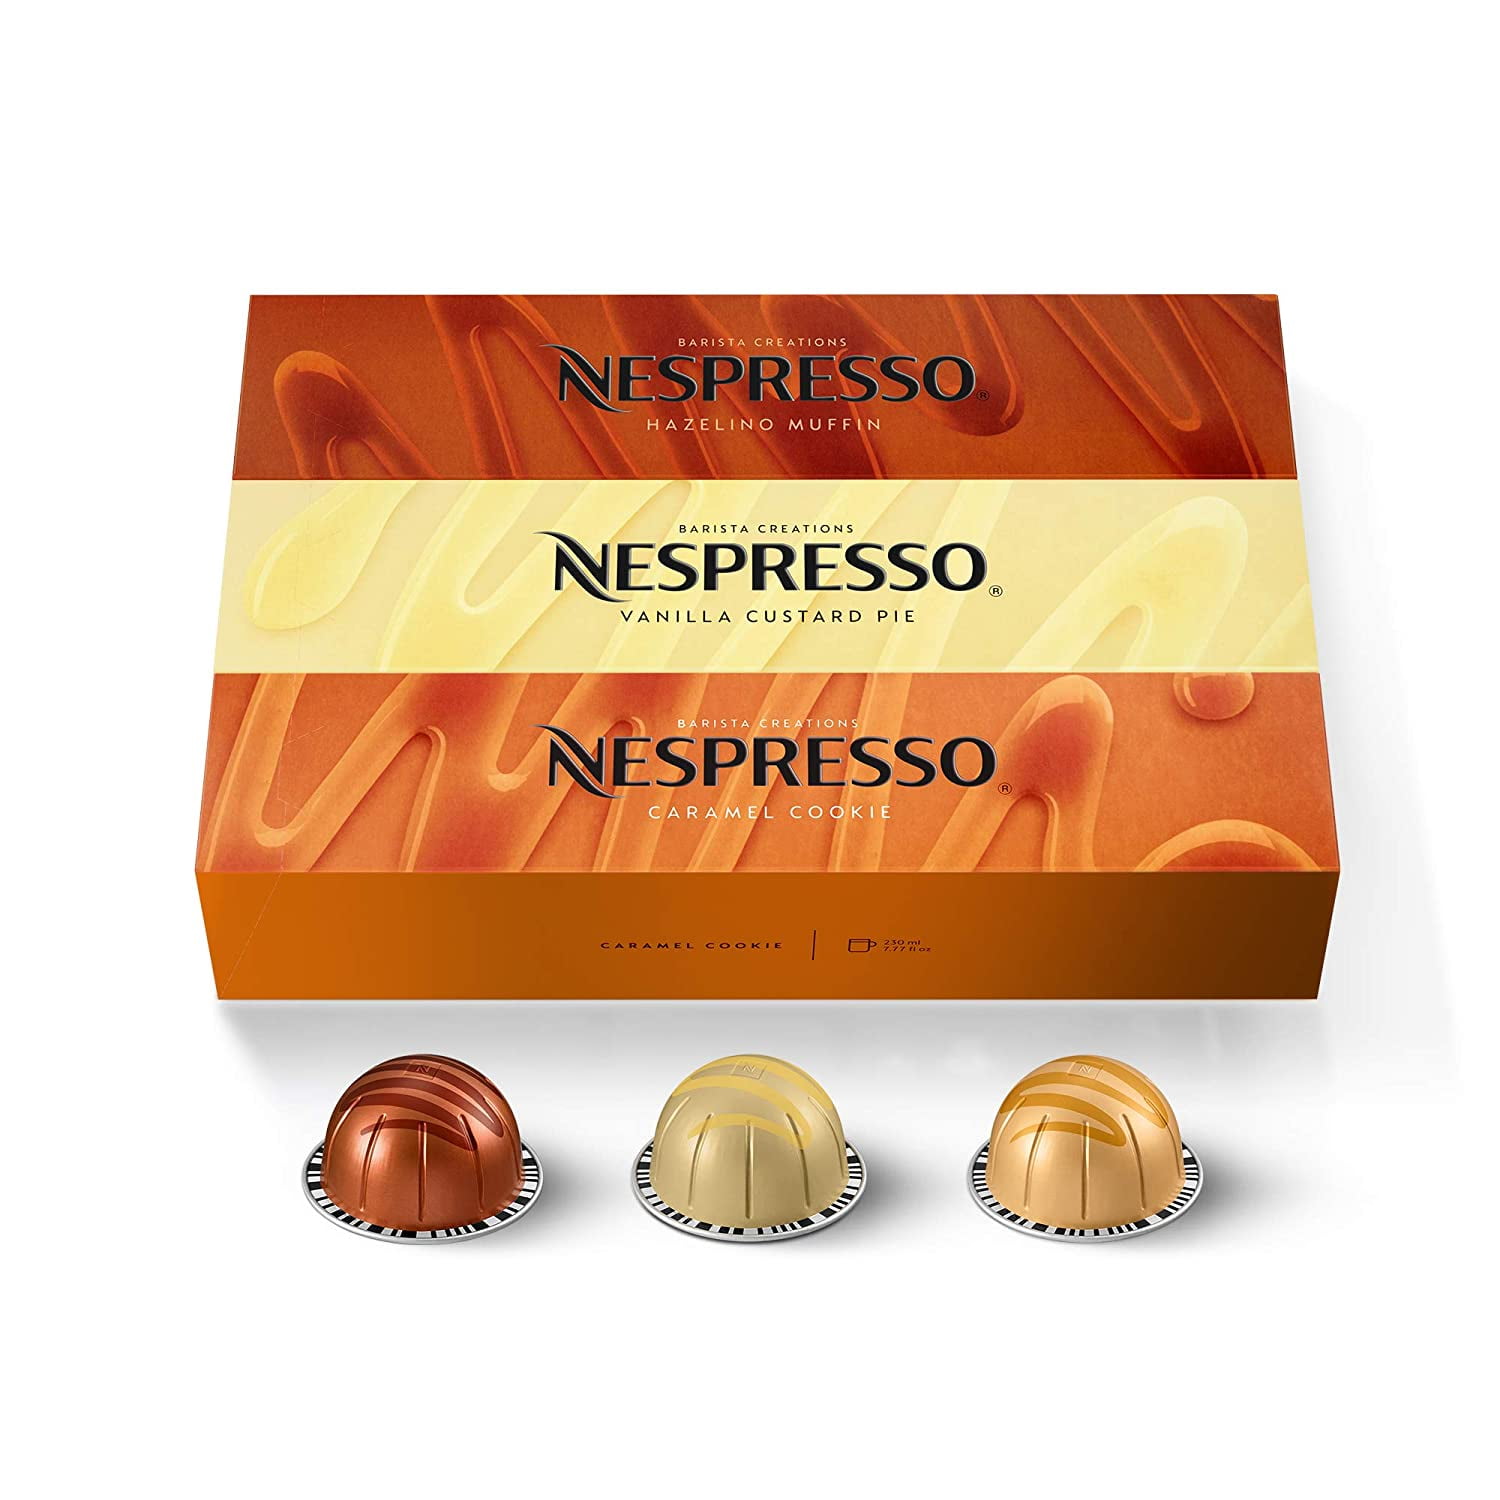 Nespresso Capsules Vertuo, Barista Flavored Pack, Medium Roast Coffee, 30  Count Coffee Pods, Brews 7.77 fl. oz